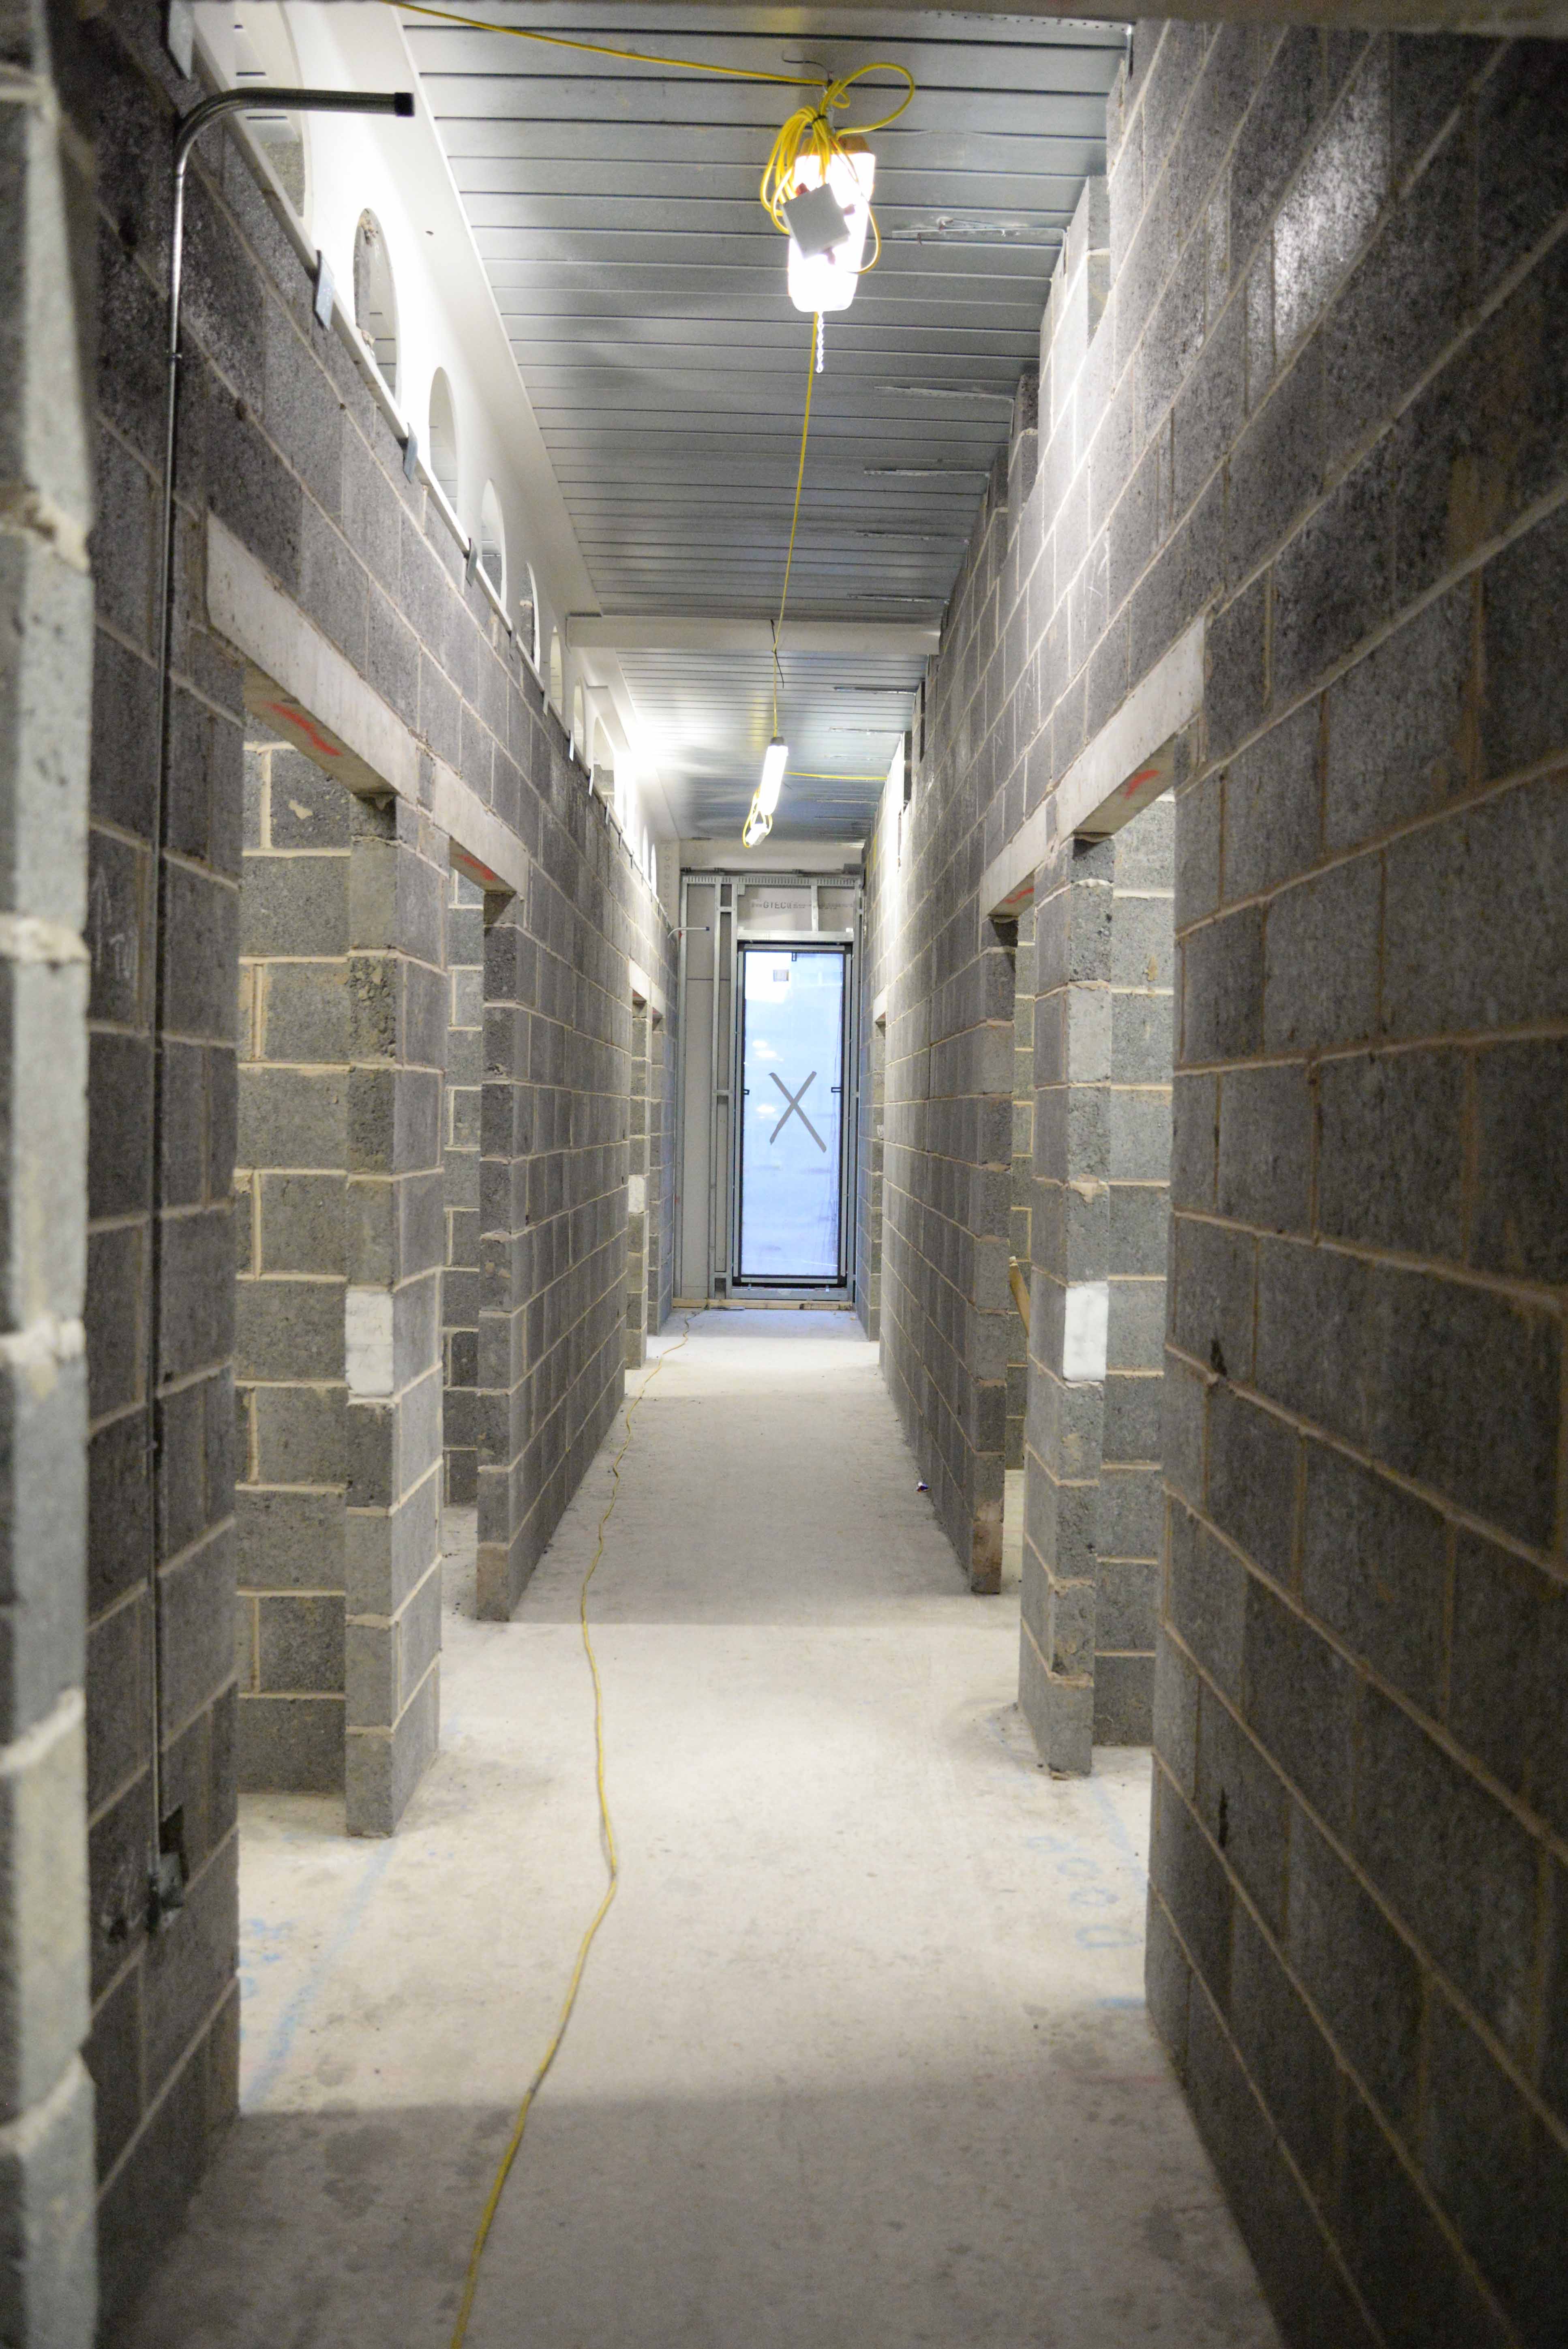 Image of a long corridor, the walls are concrete